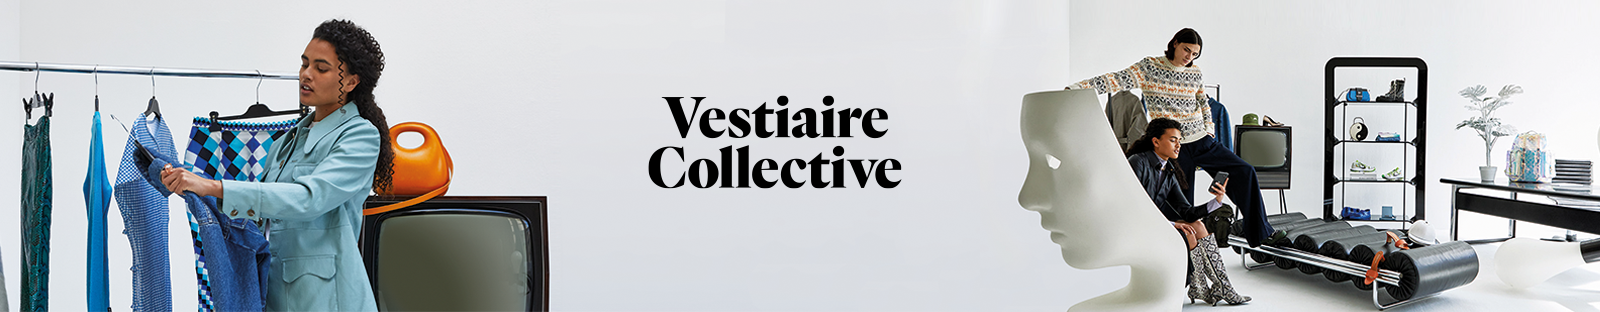 Vestiaire Collective Careers